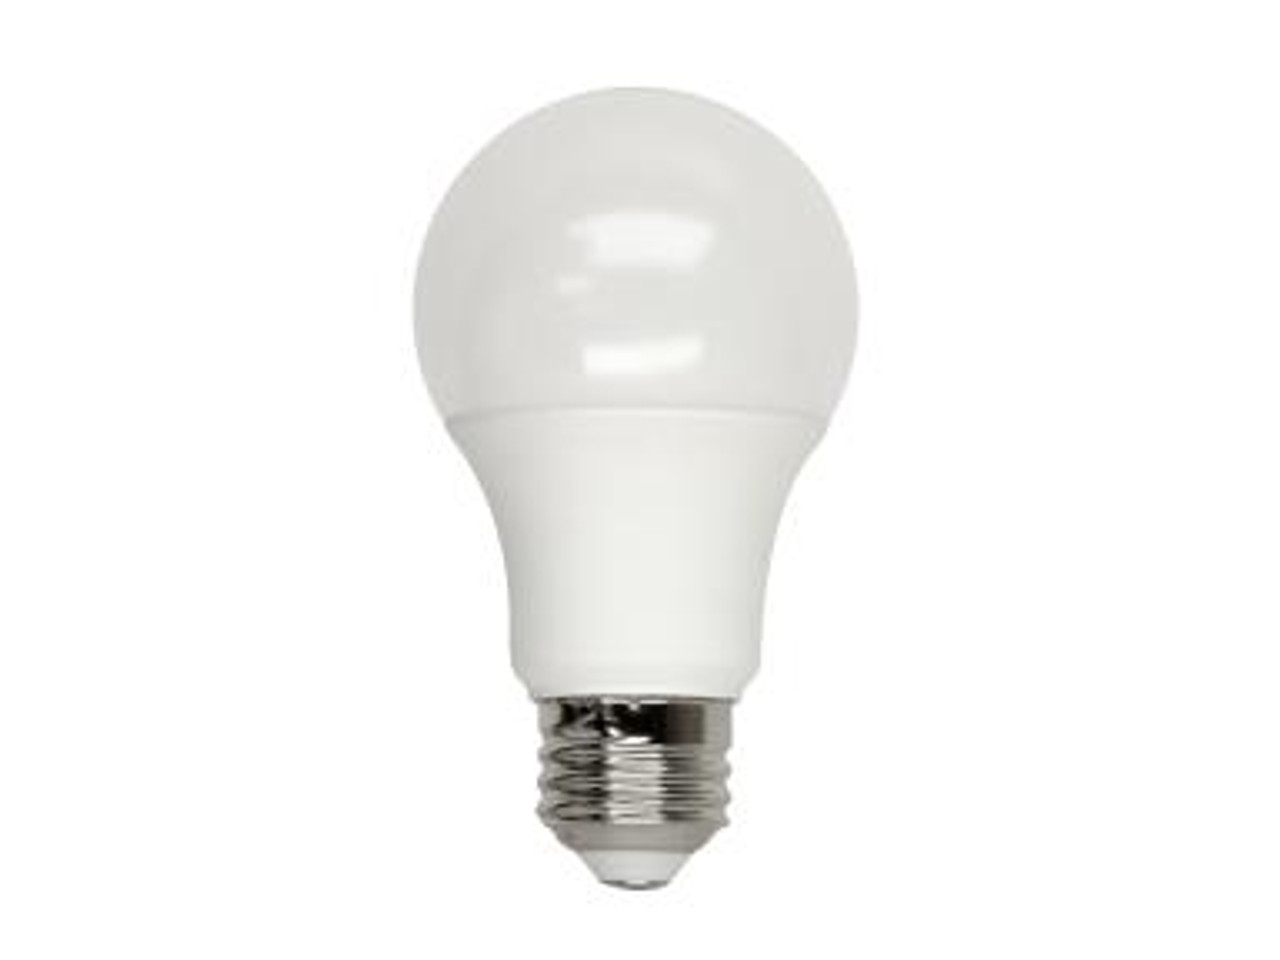 13 Watt Standard Shaped Bulb Replaces Watt Incandescent Bulbs Dimmable 4000K Color Temperature - My Lighting Solutions